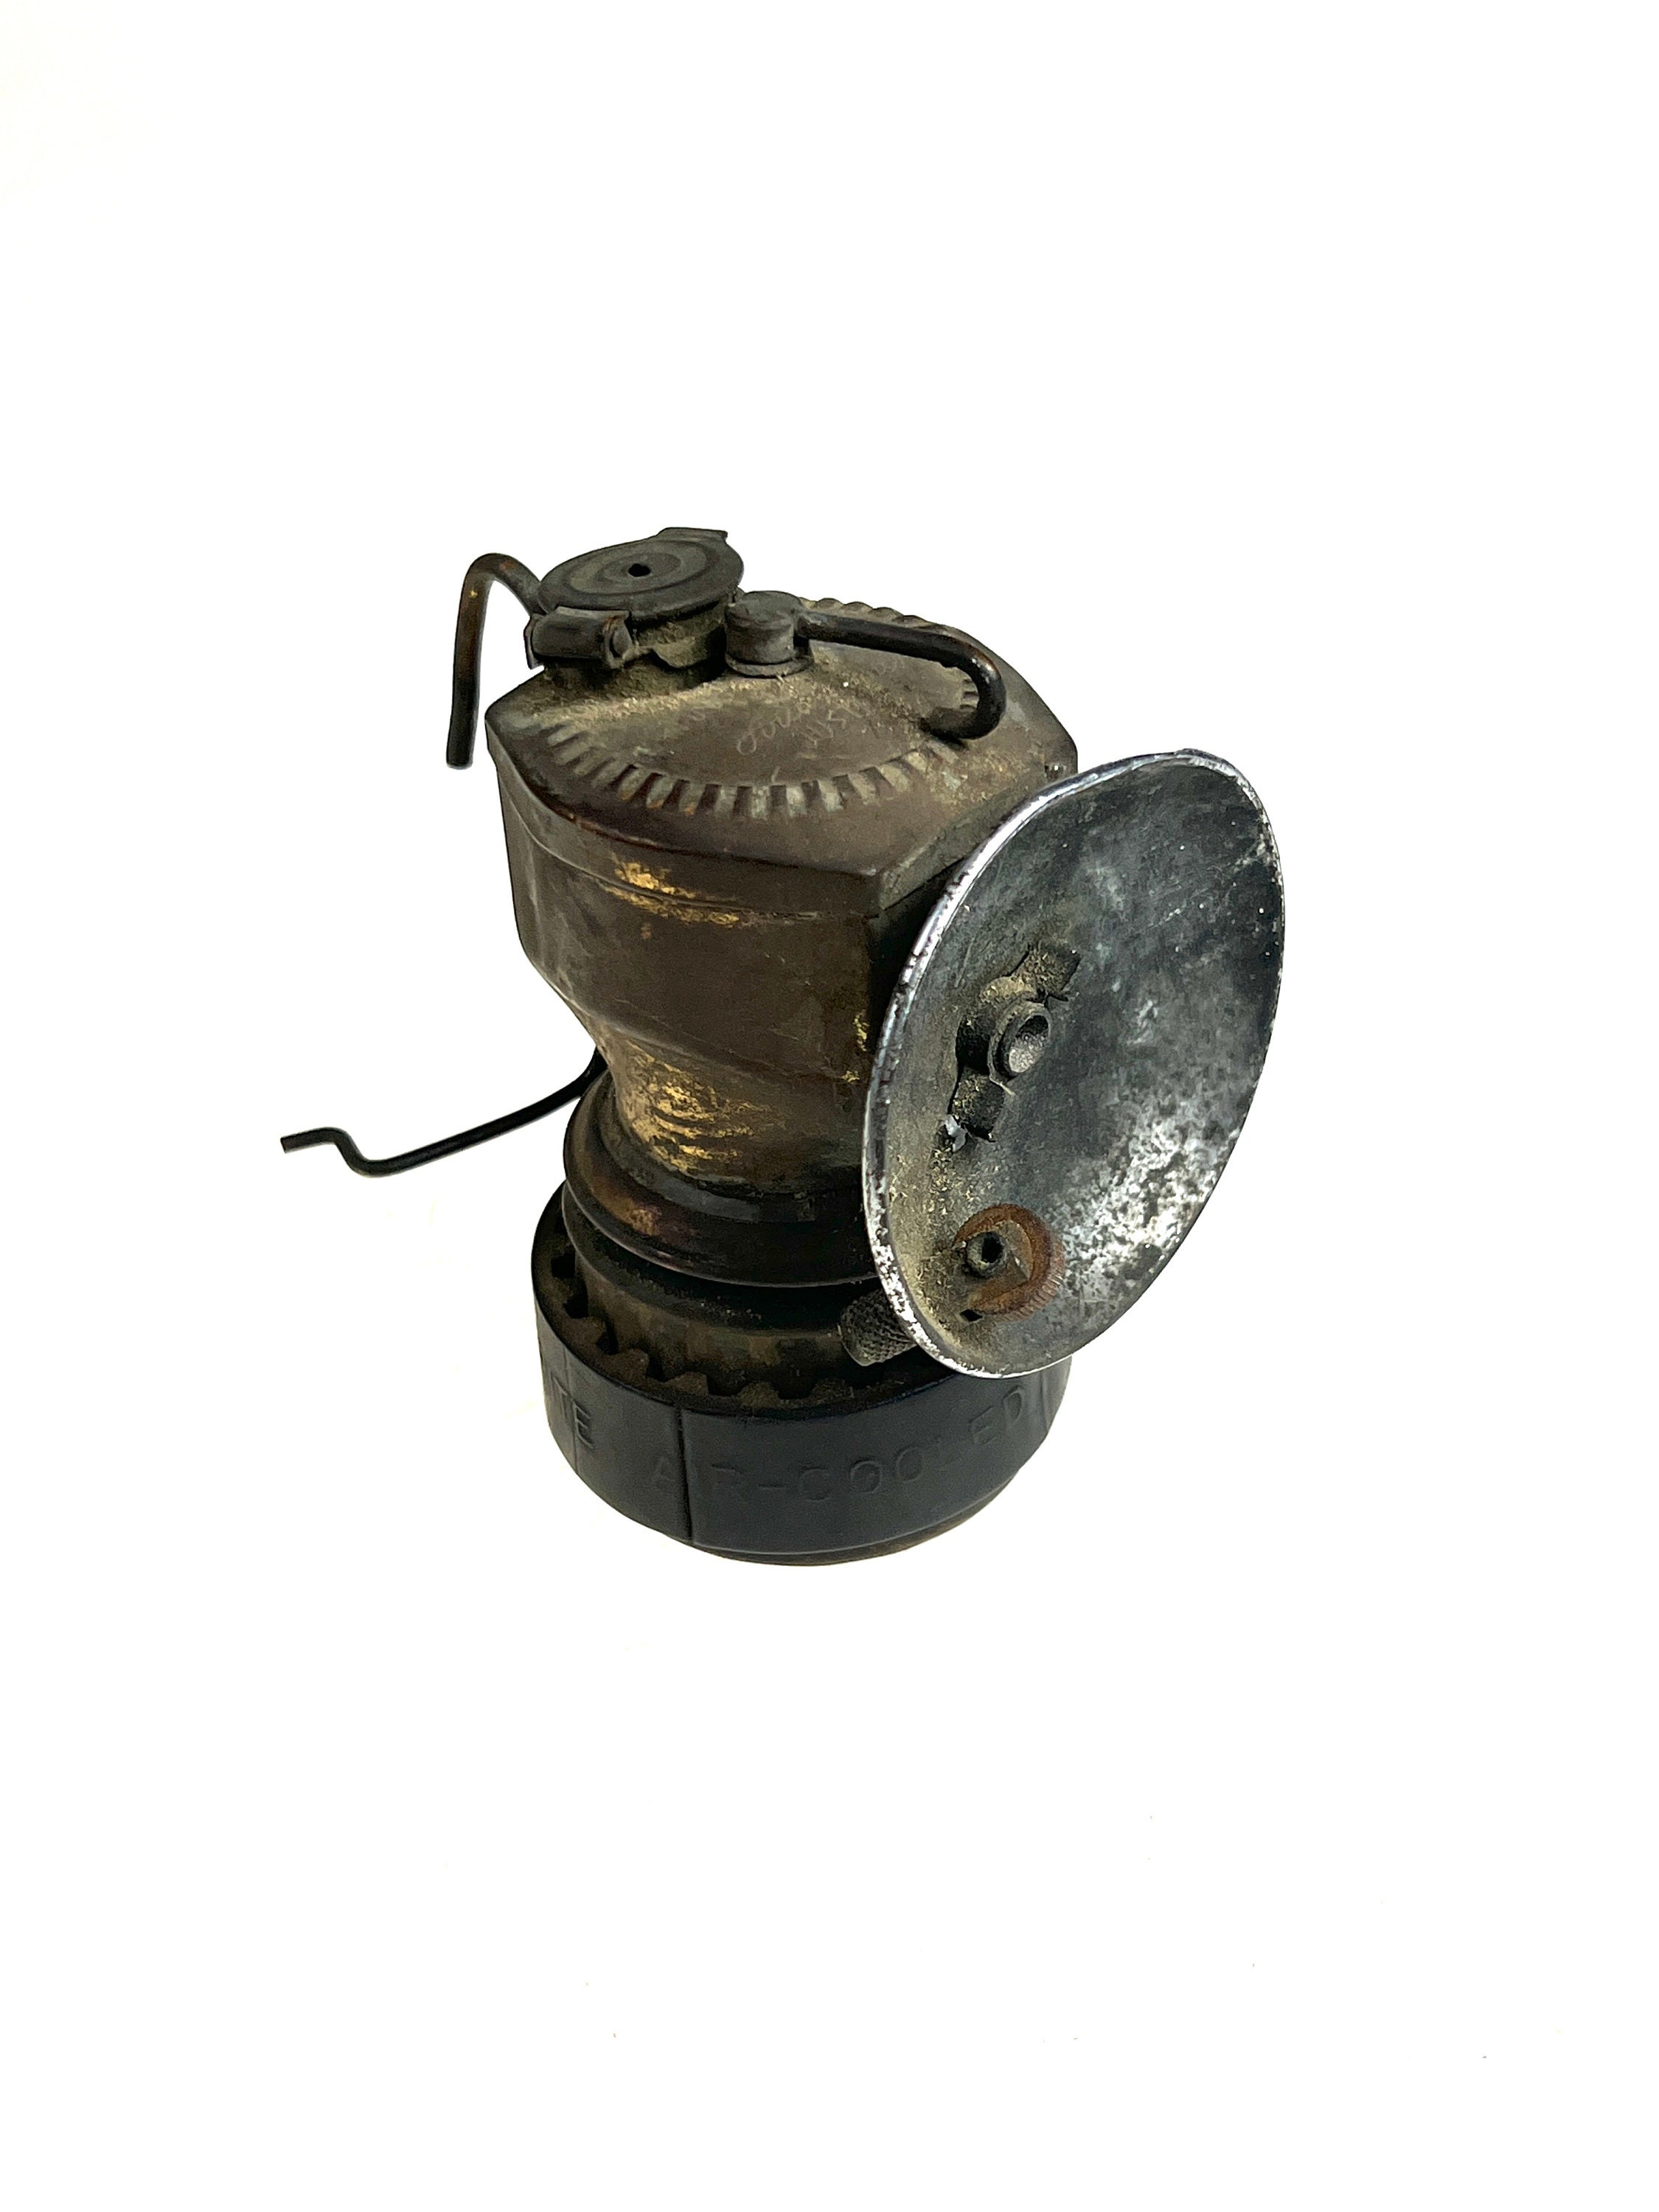 Vintage Miners Light, Luminaire, Light Stick, Model 2105-4, Lantern,  Battery Operated, Flashlight, Justrite -  Singapore